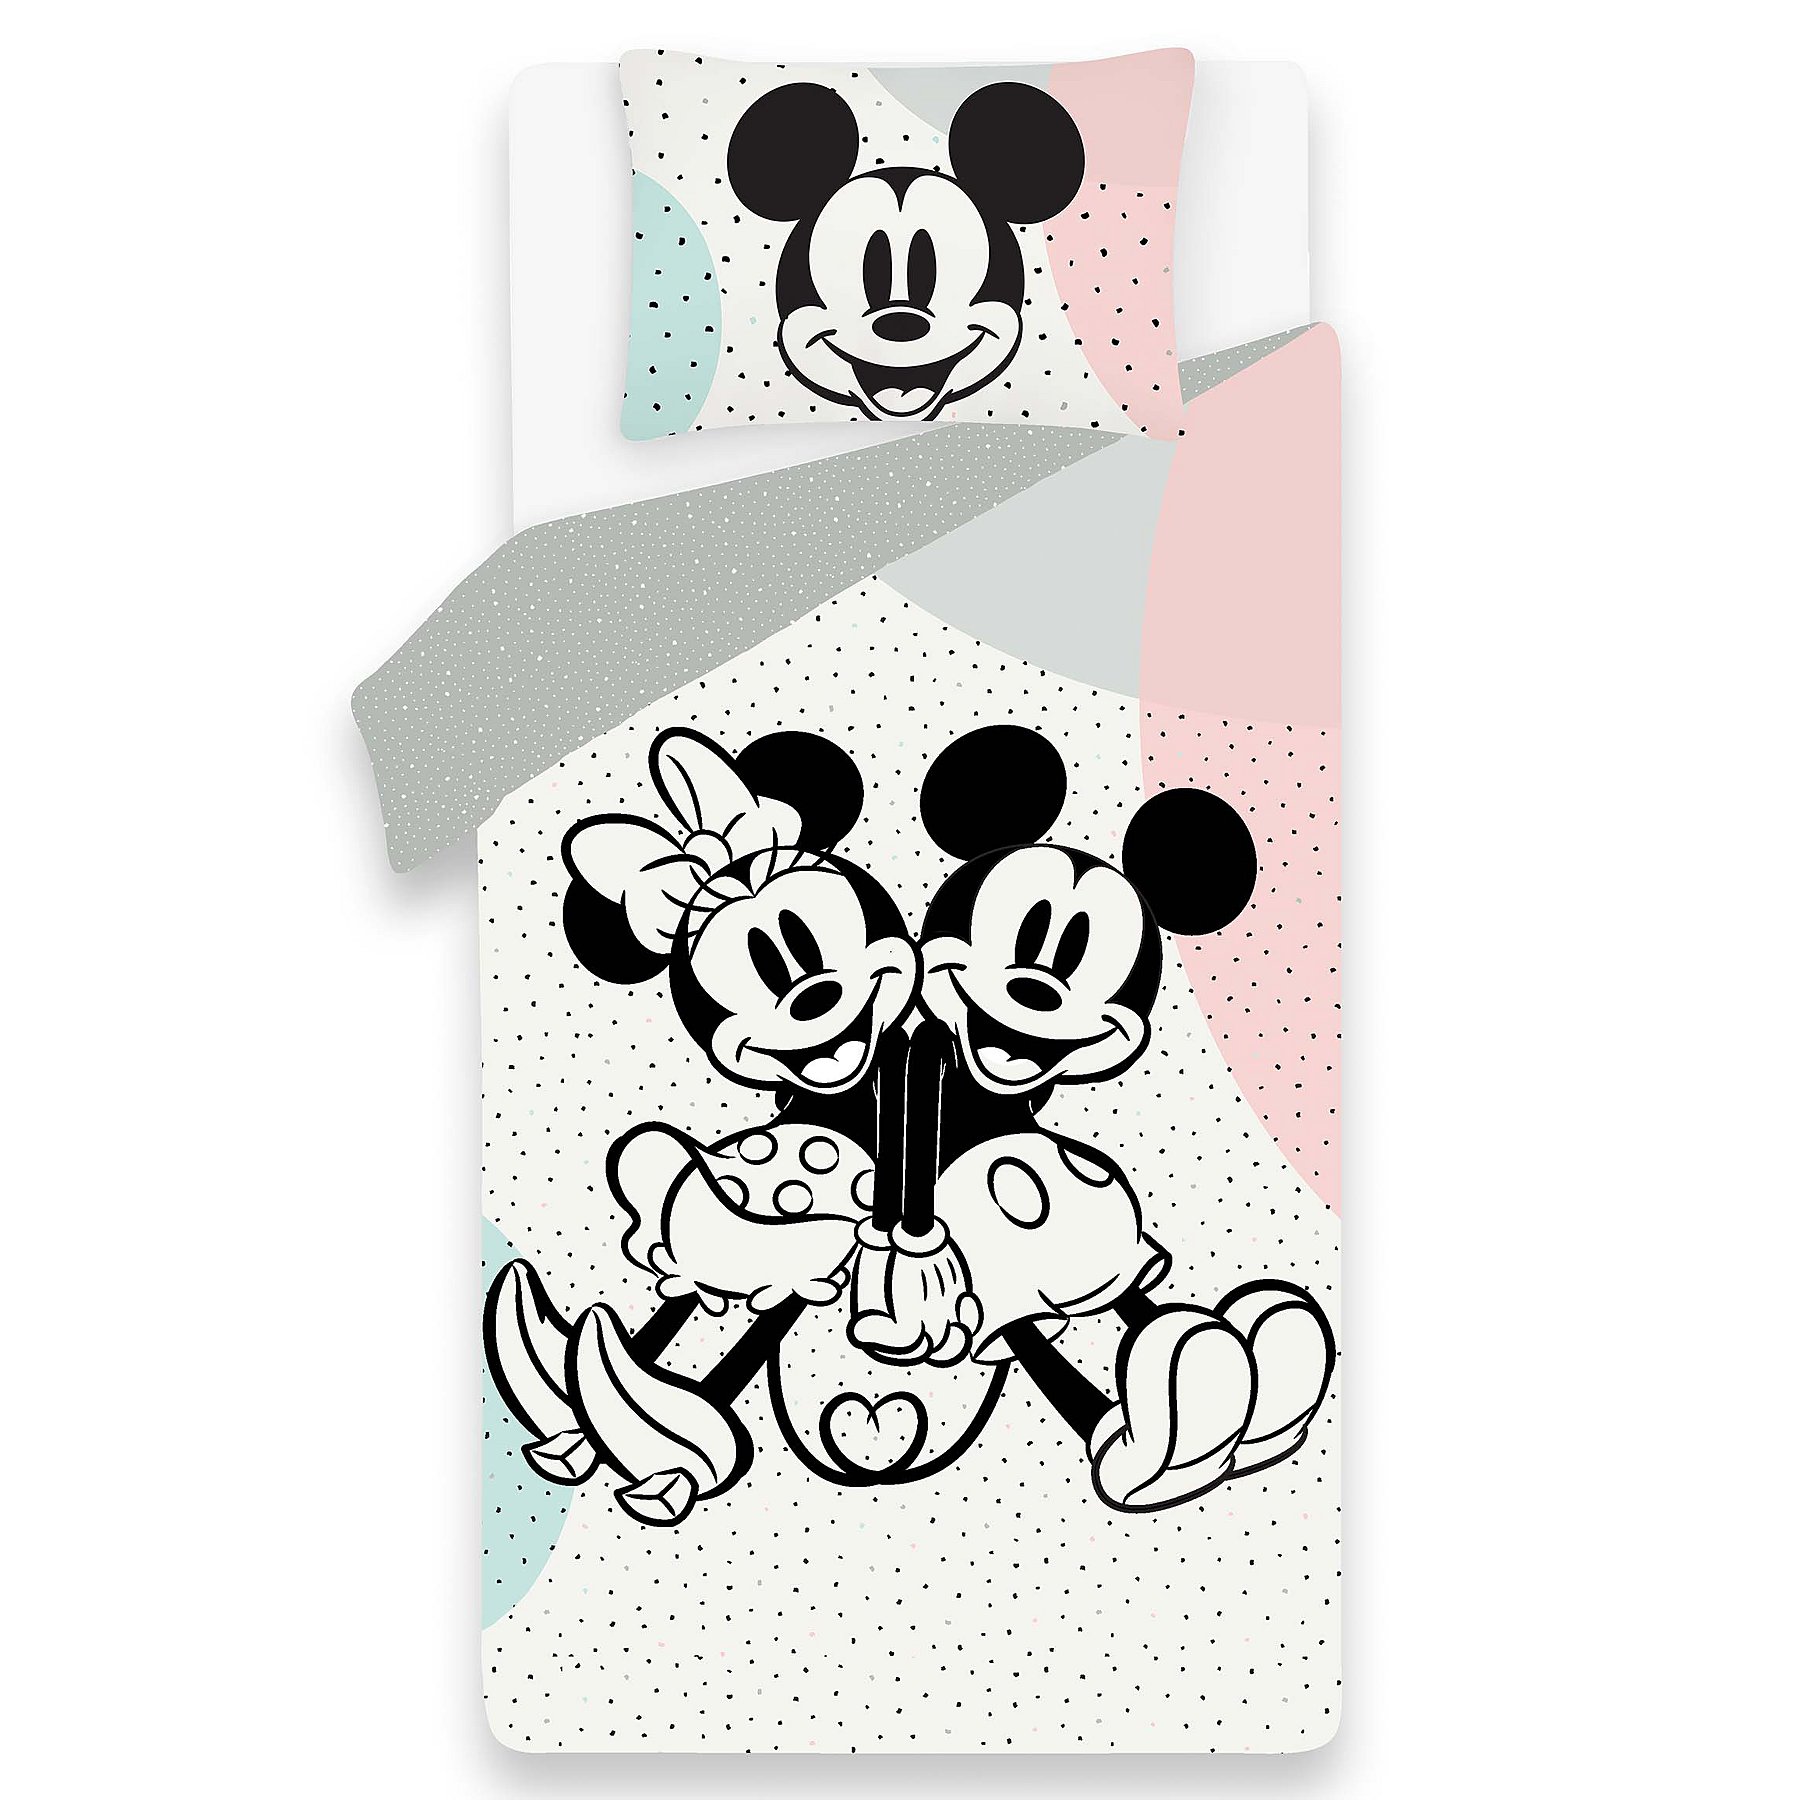 Minnie Panel Reversible Duvet Set, Mickey Mouse Duvet Cover